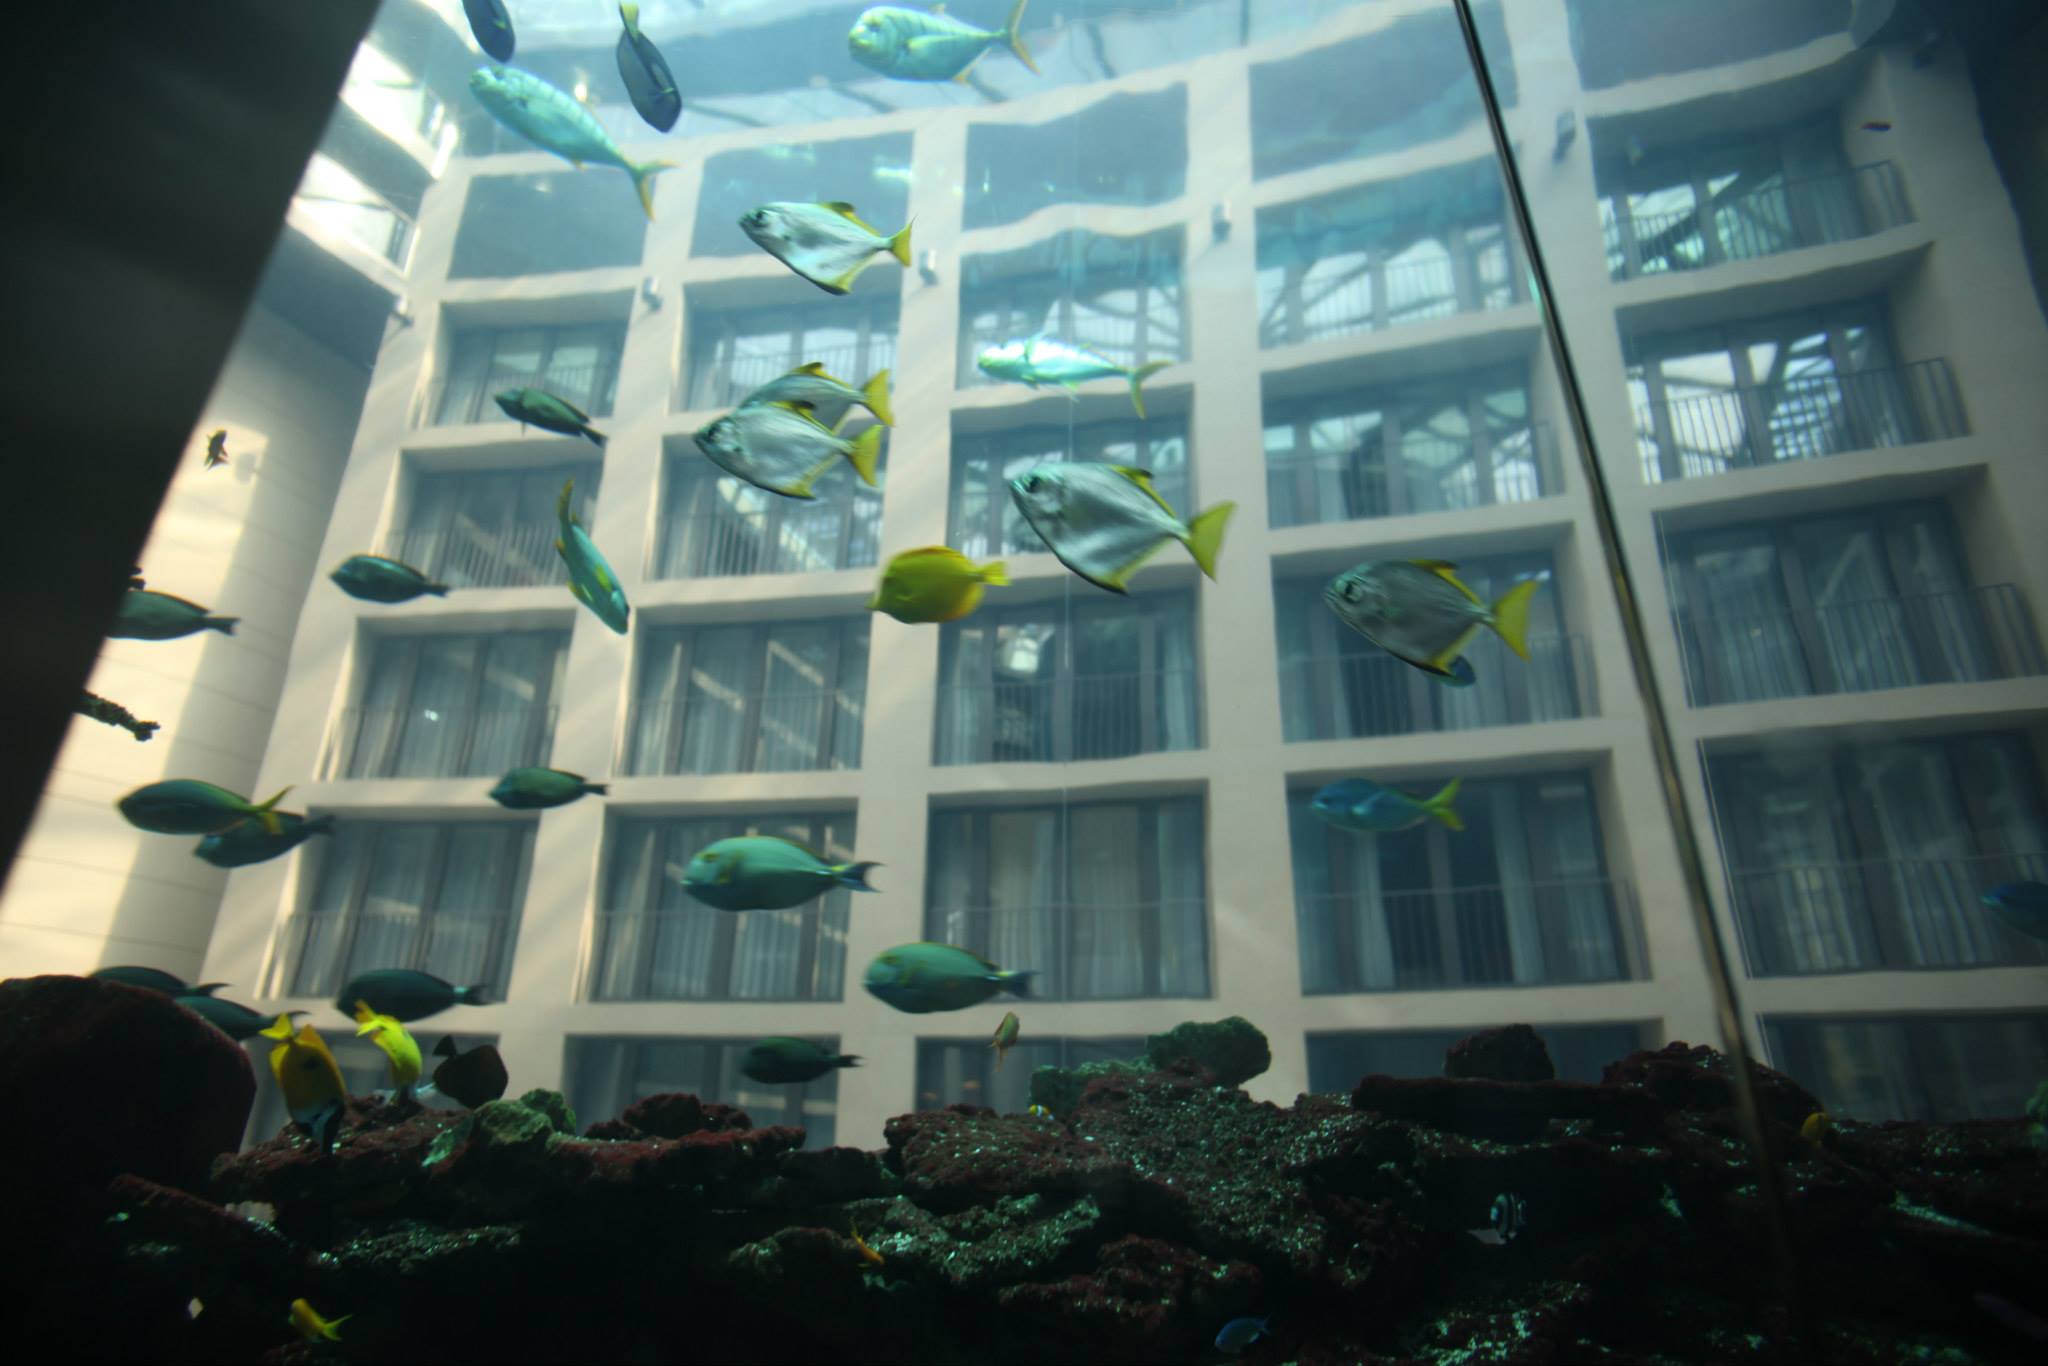  Aquariums For Kids To See and Explore, Aquadom Berlin